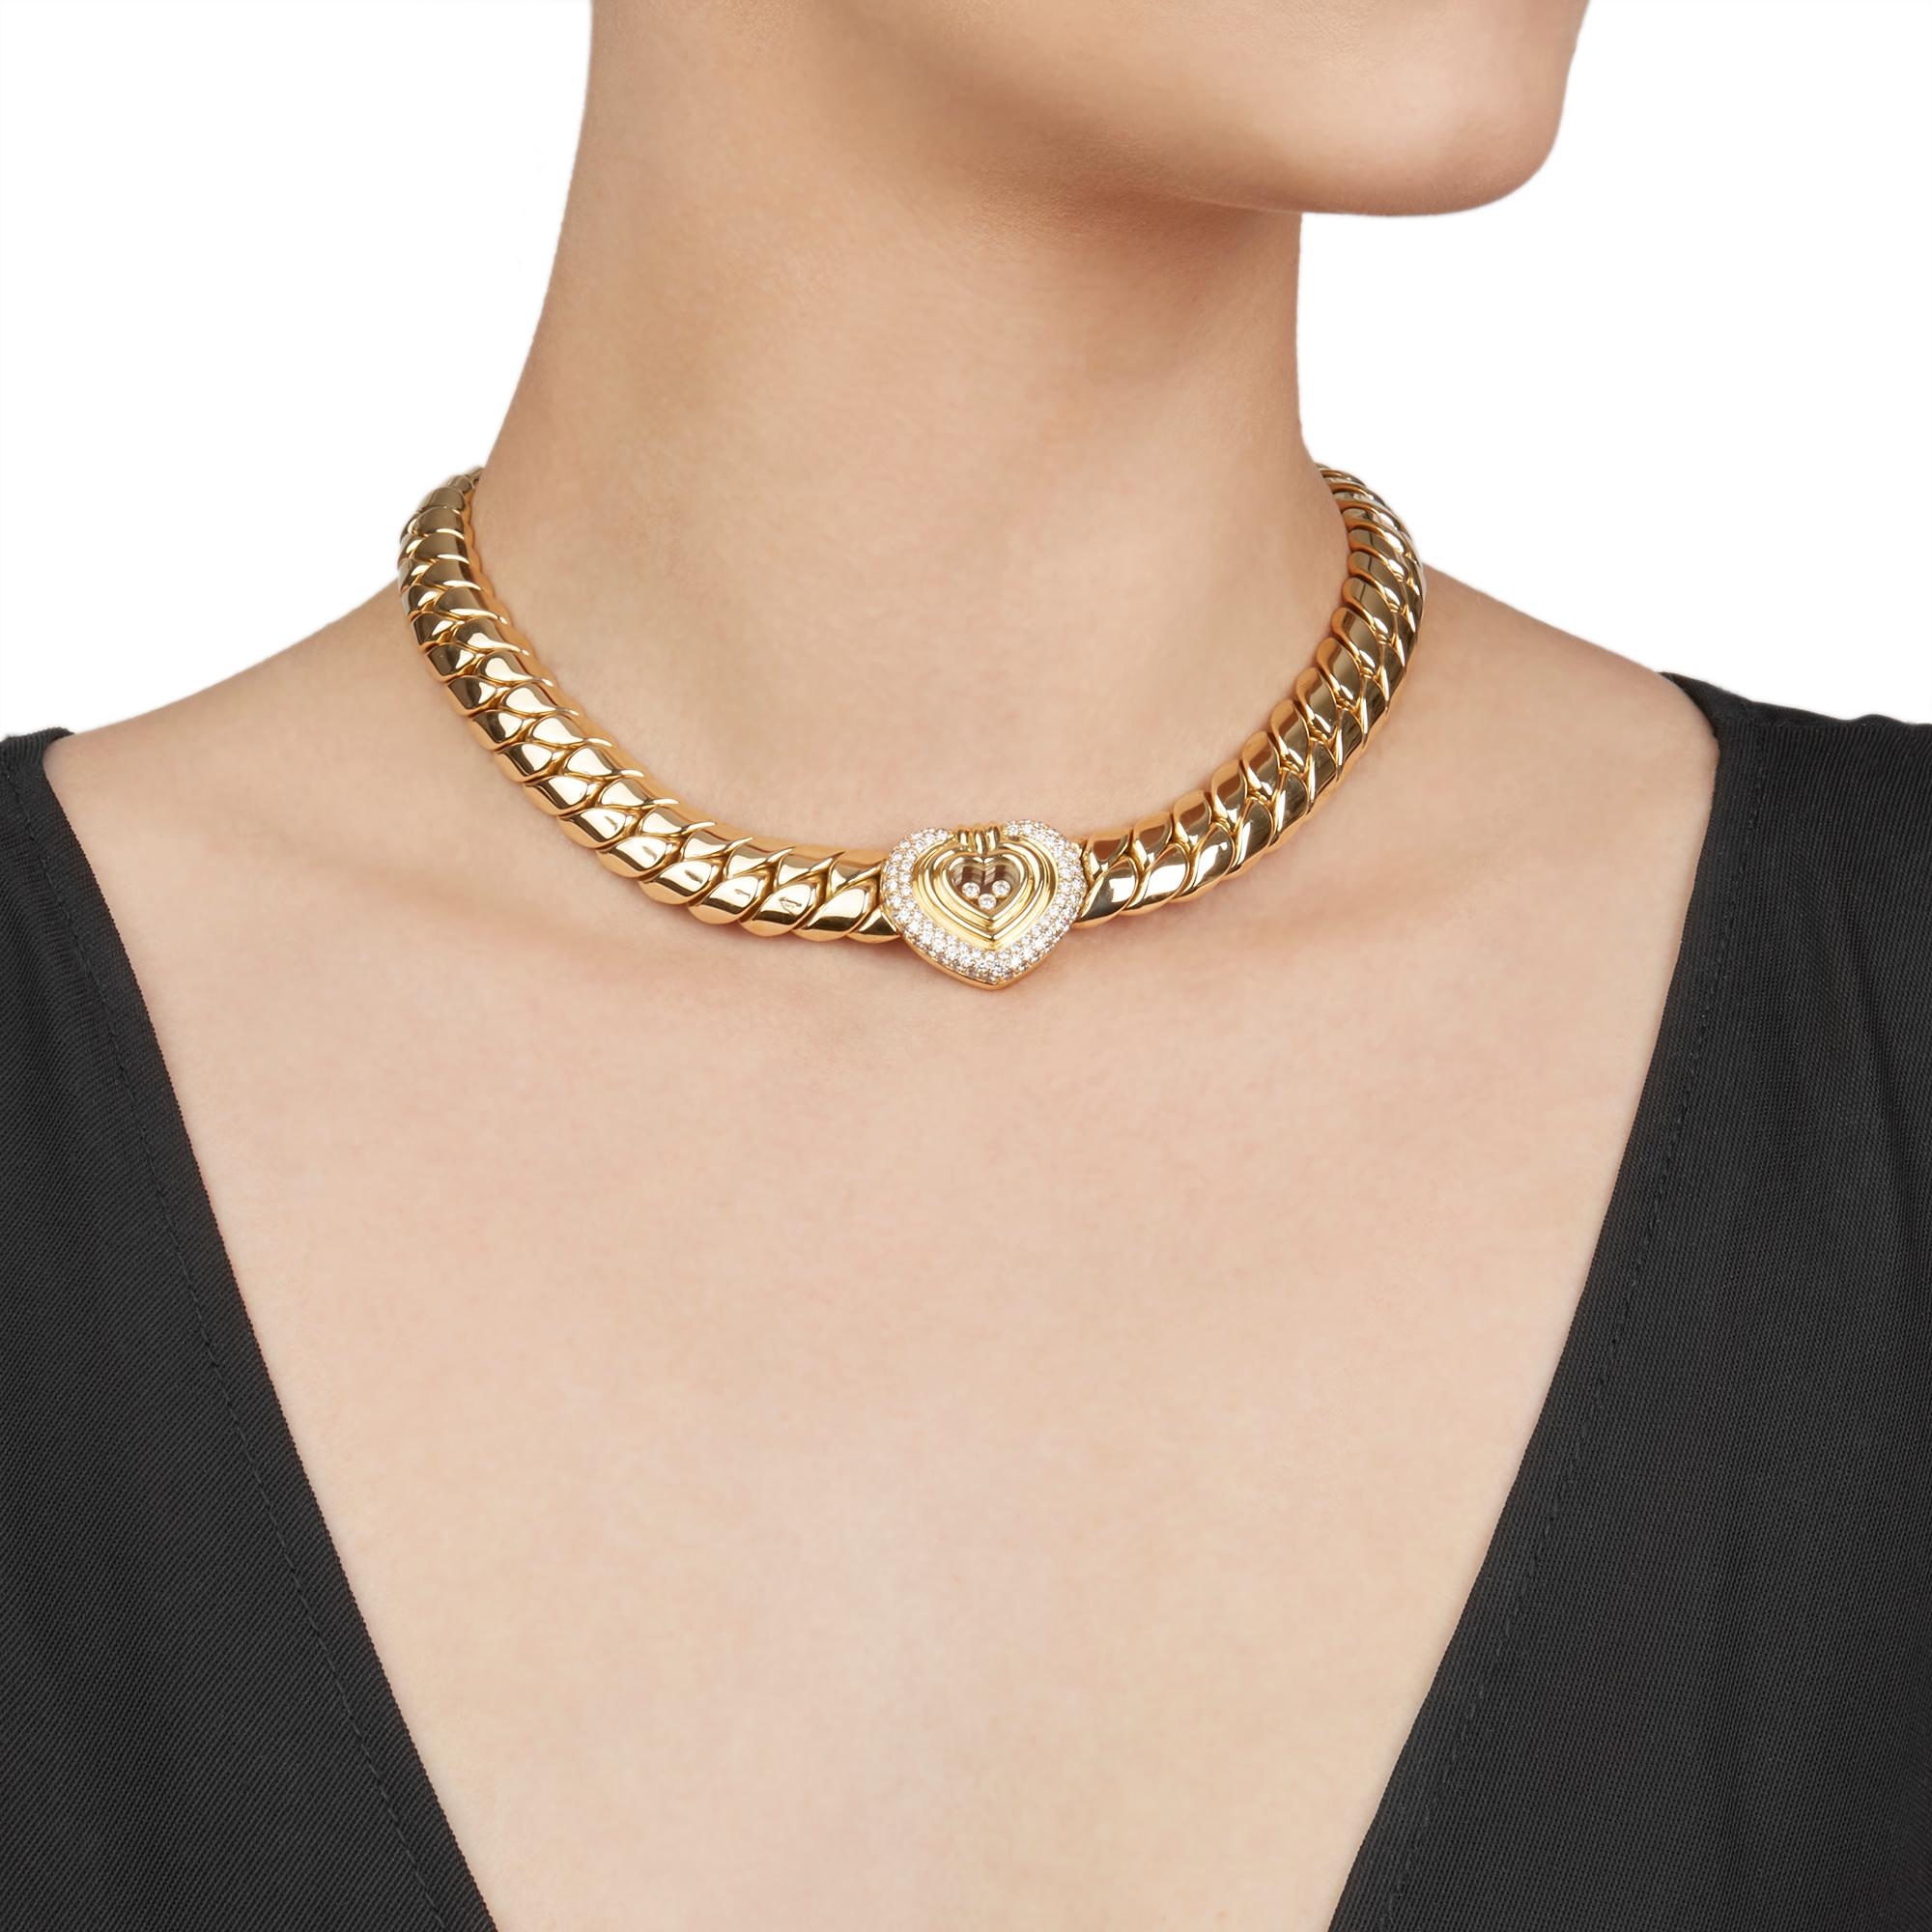 Code: COM2142
Brand: Chopard
Description: 18k Yellow Gold Happy Diamonds Necklace
Accompanied With: Presentation Box
Gender: Ladies
Necklace Length: 40cm
Necklace Width: 1.3cm
Pendant Length: 2.3cm
Pendant Width: 2.7cm
Clasp Type: Push